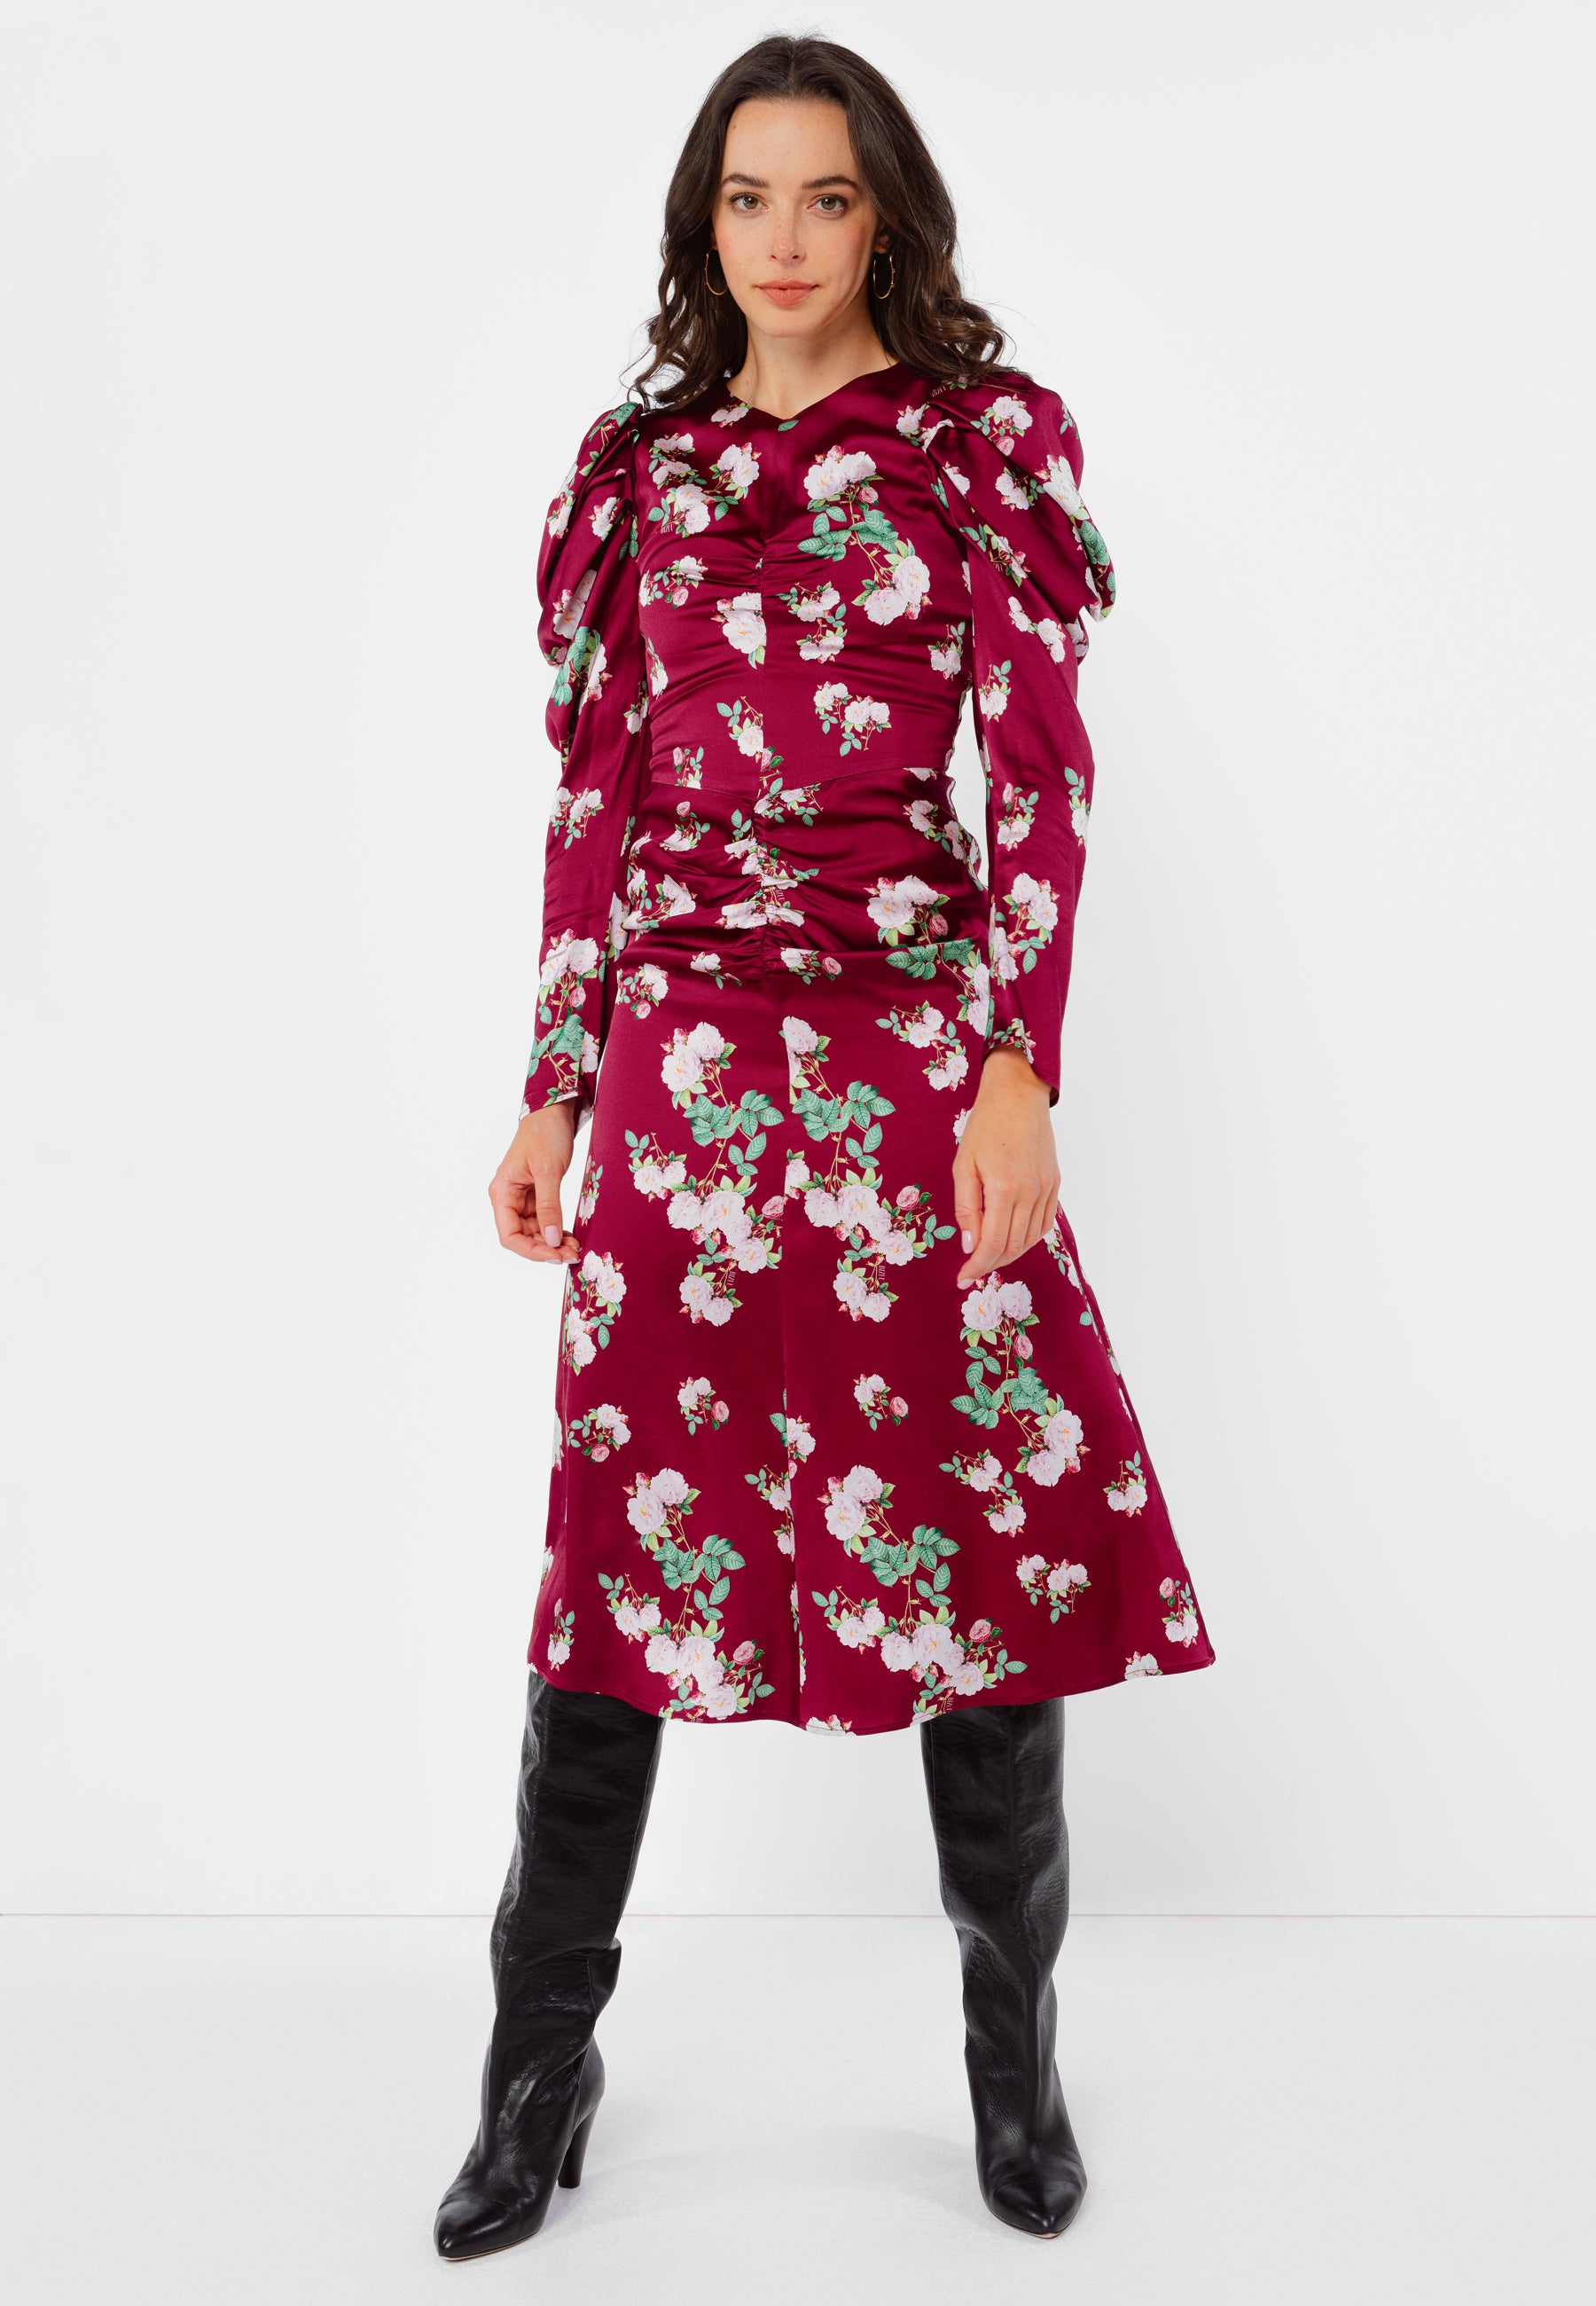 LAPLAZI burgundy midi dress with a delicately pointed neckline